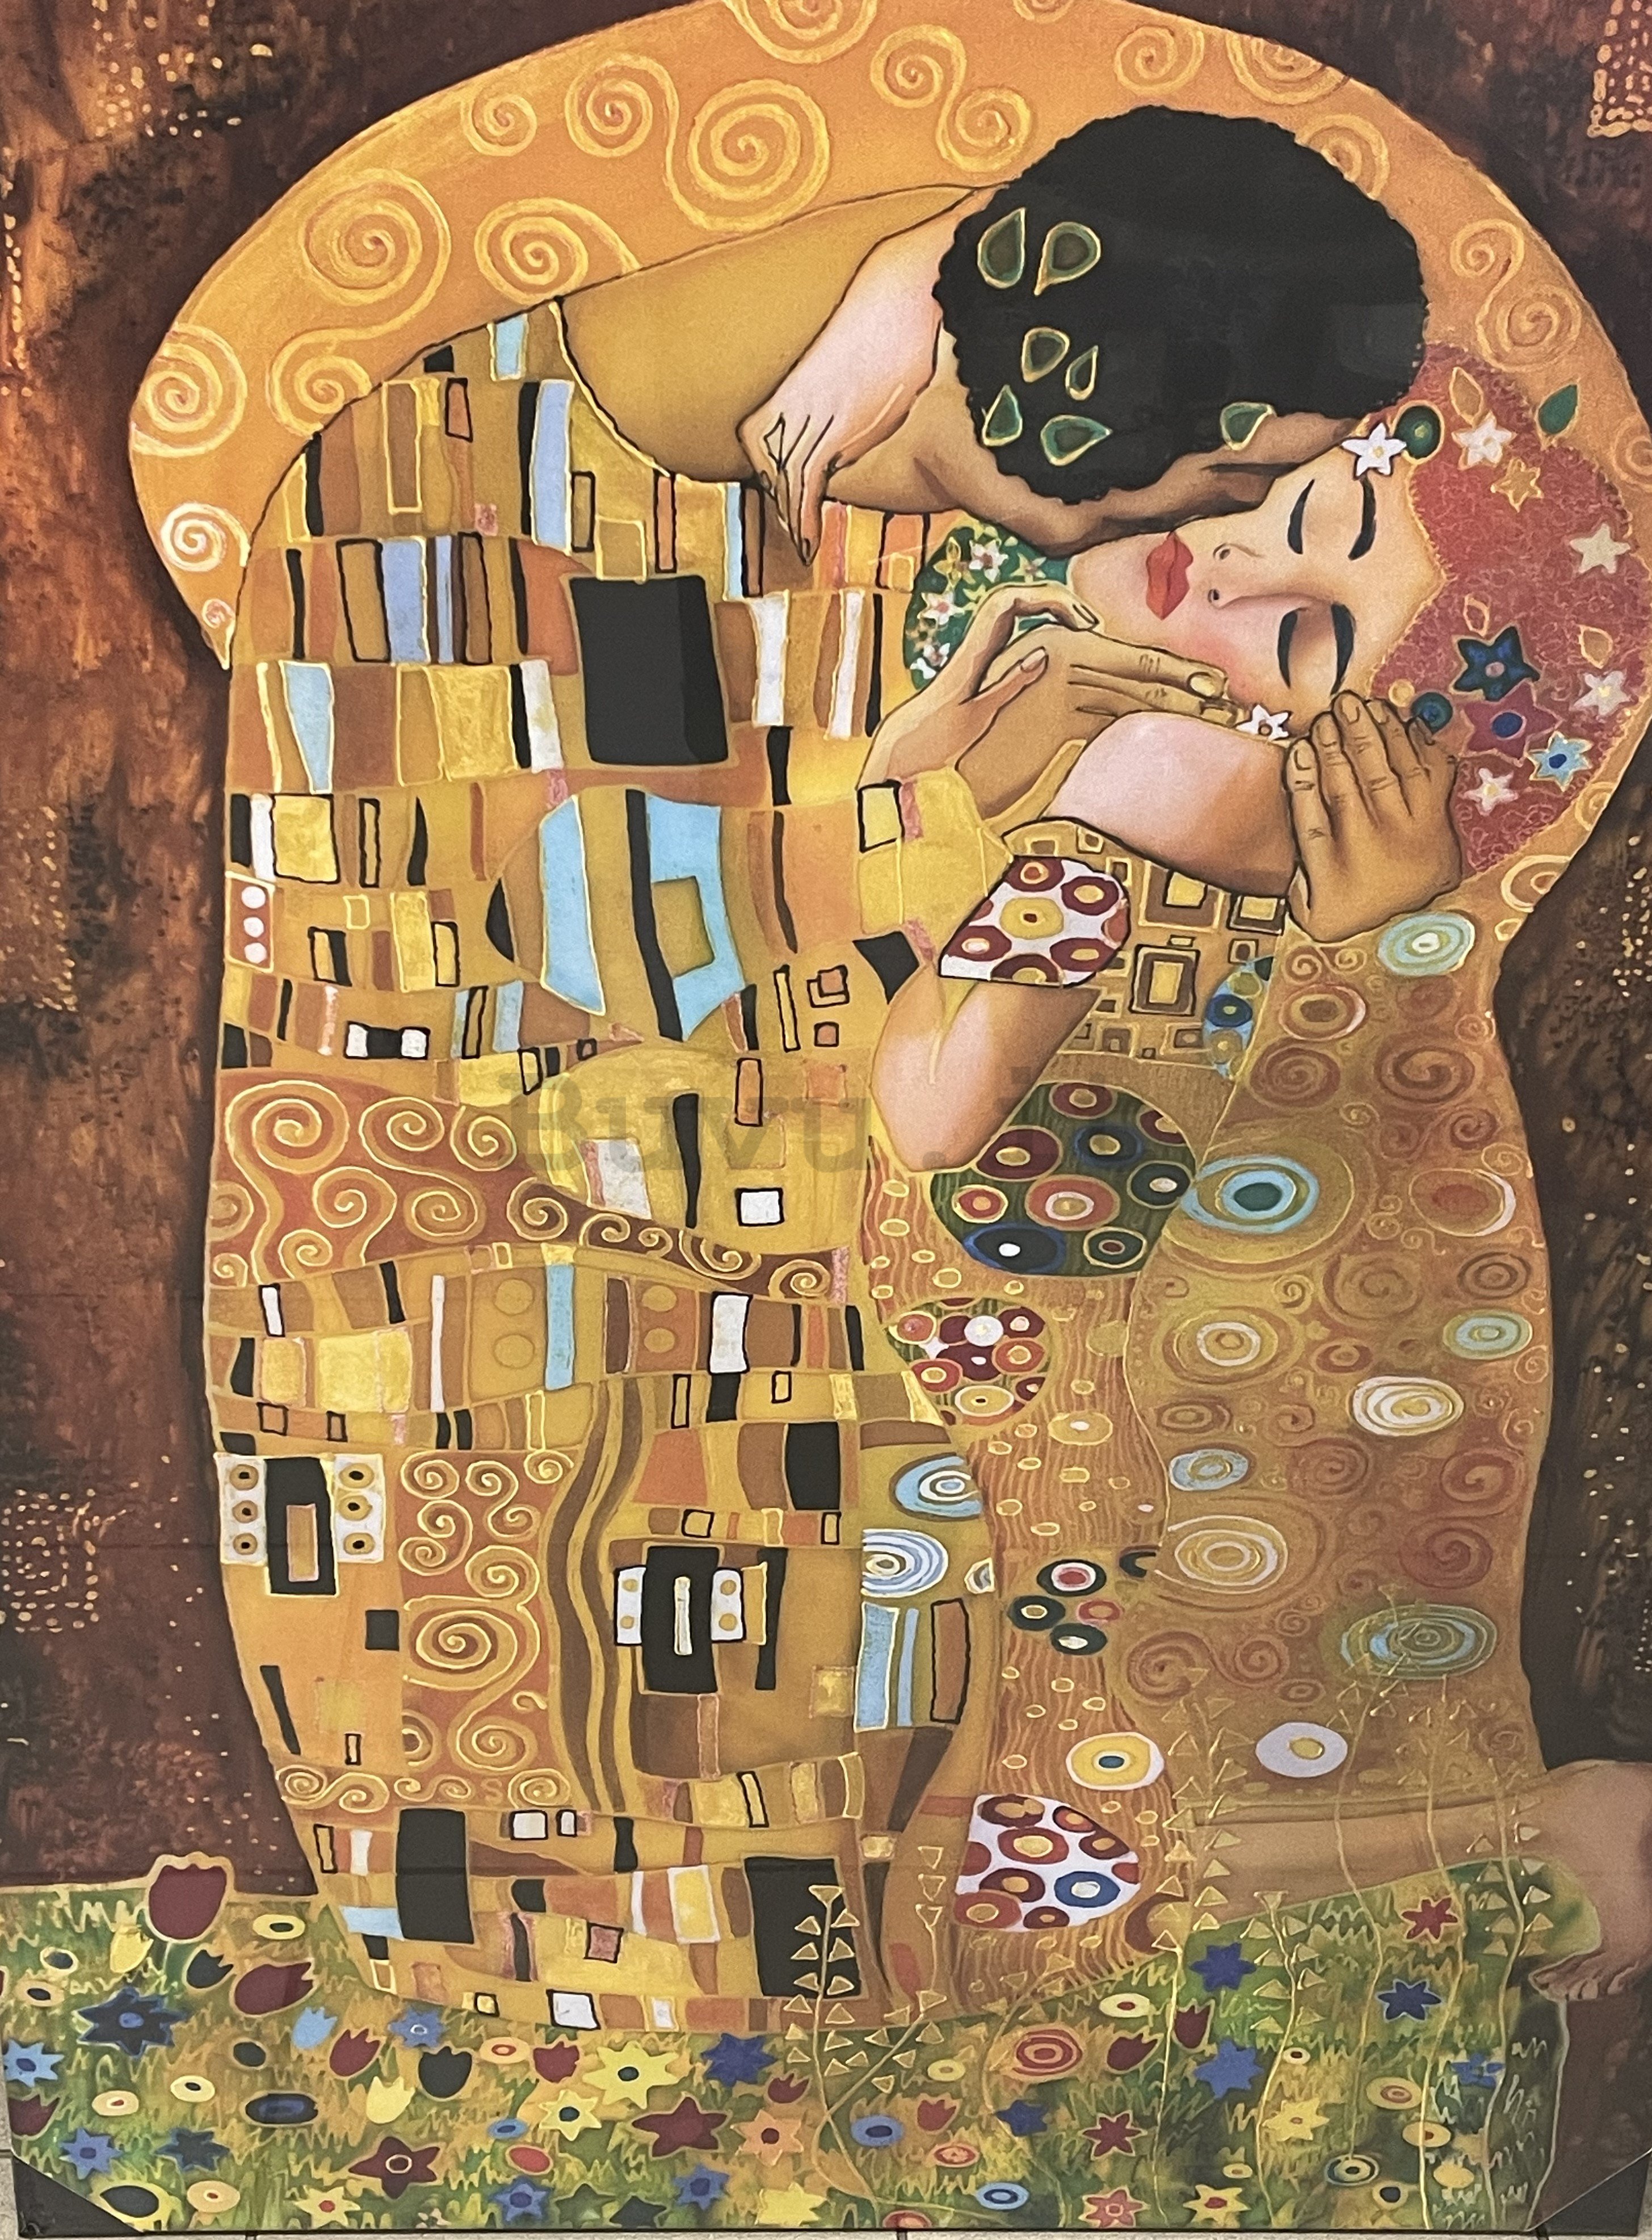 Quadro su tela: Bacio, Gustav Klimt - 75x100 cm